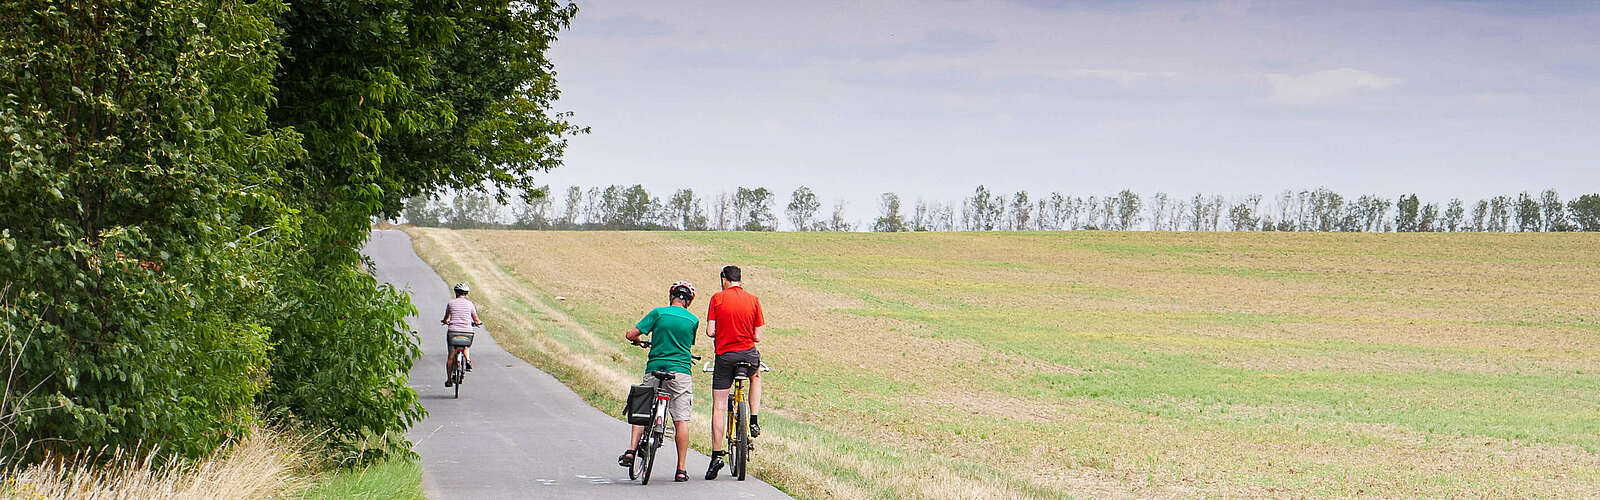 Radwandern im Naturpark Fläming,
        
    

        Foto: Welterberegion/Anja Knorr